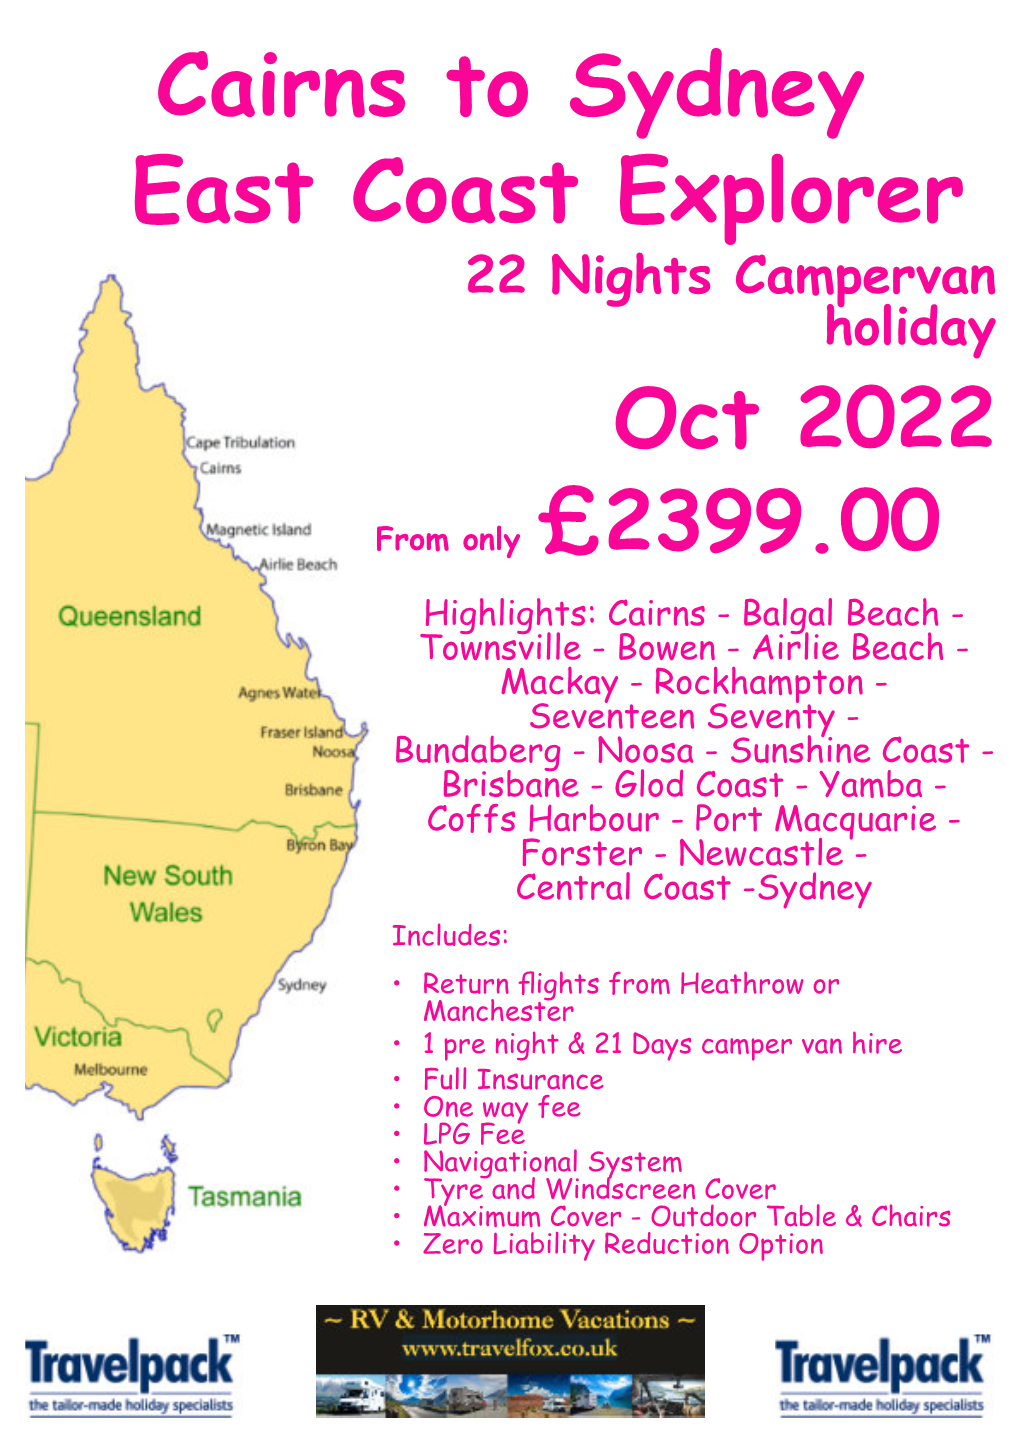 Cairns to Sydney A4 Leaflet